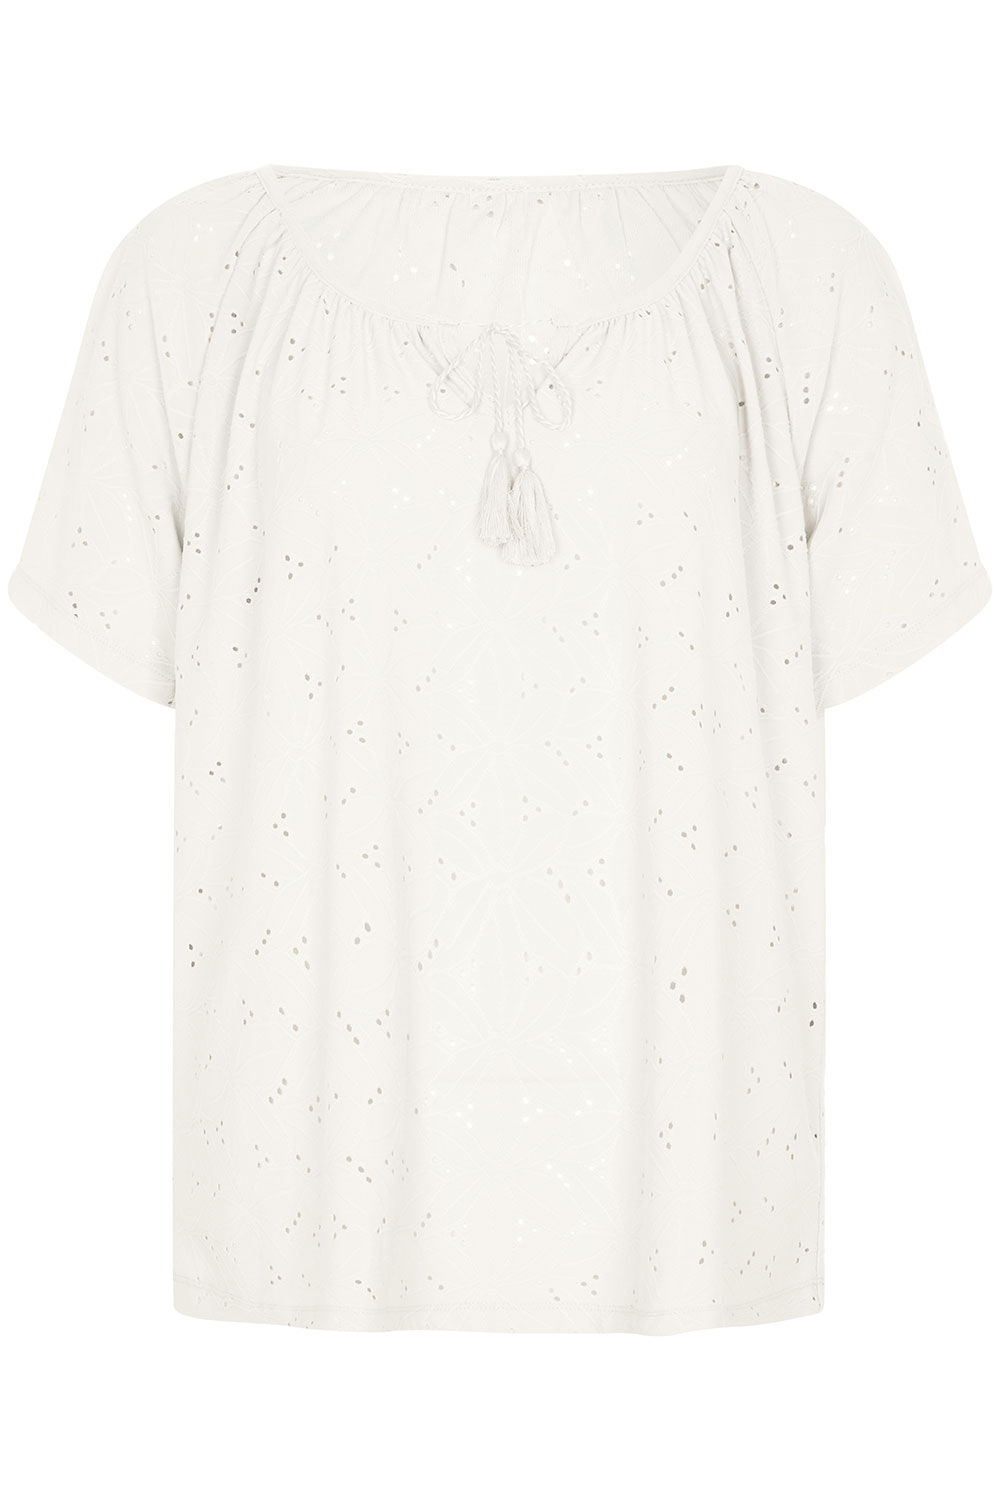 Bonmarche Ivory Short Sleeve Broderie Design Jersey T-Shirt, Size: 20